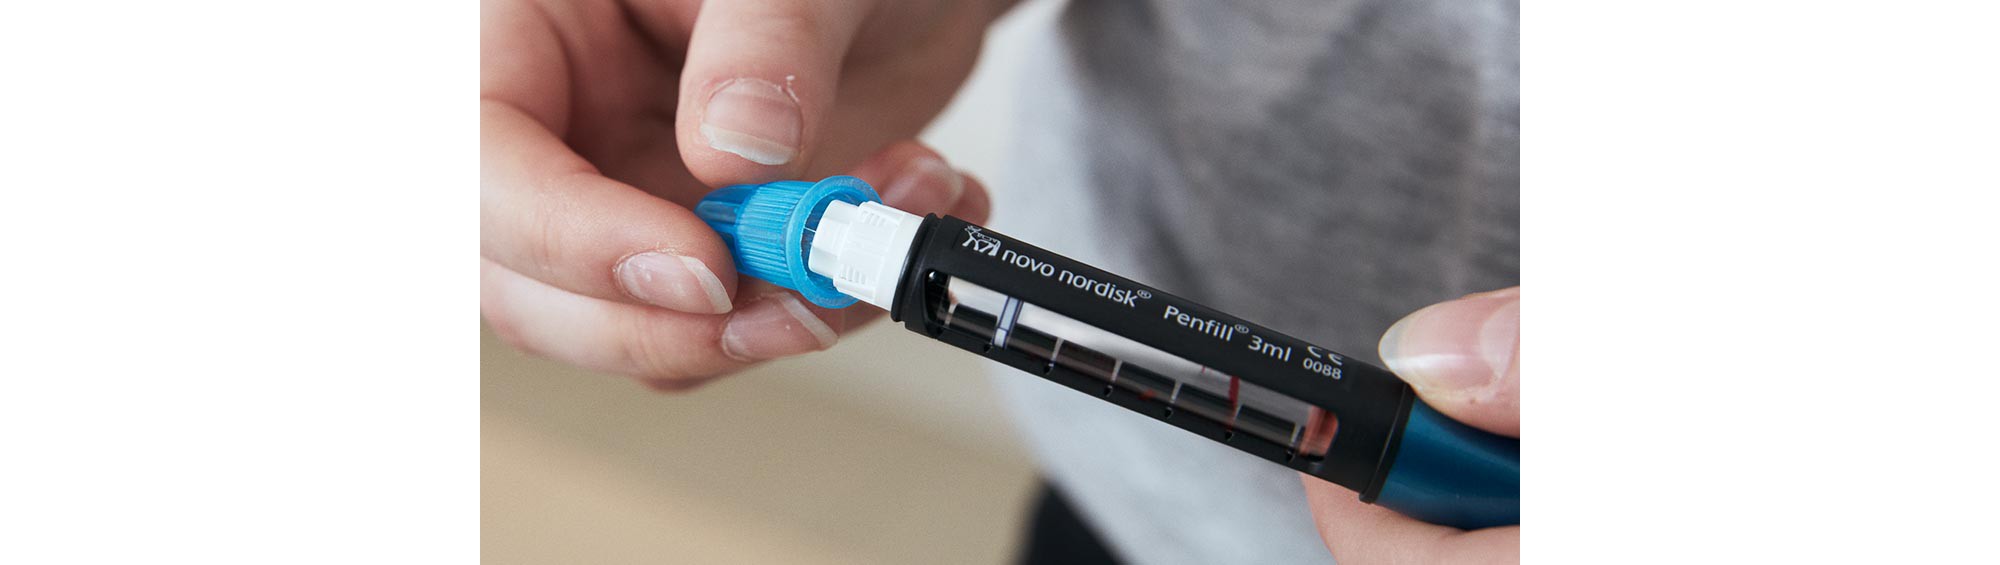 29g 30g 31g 32g 4mm 5mm 6mm 8mm Safety Insulin Pen Needle - China  Disposable Insulin Pen Needle, Medical Insulin Pen Needle